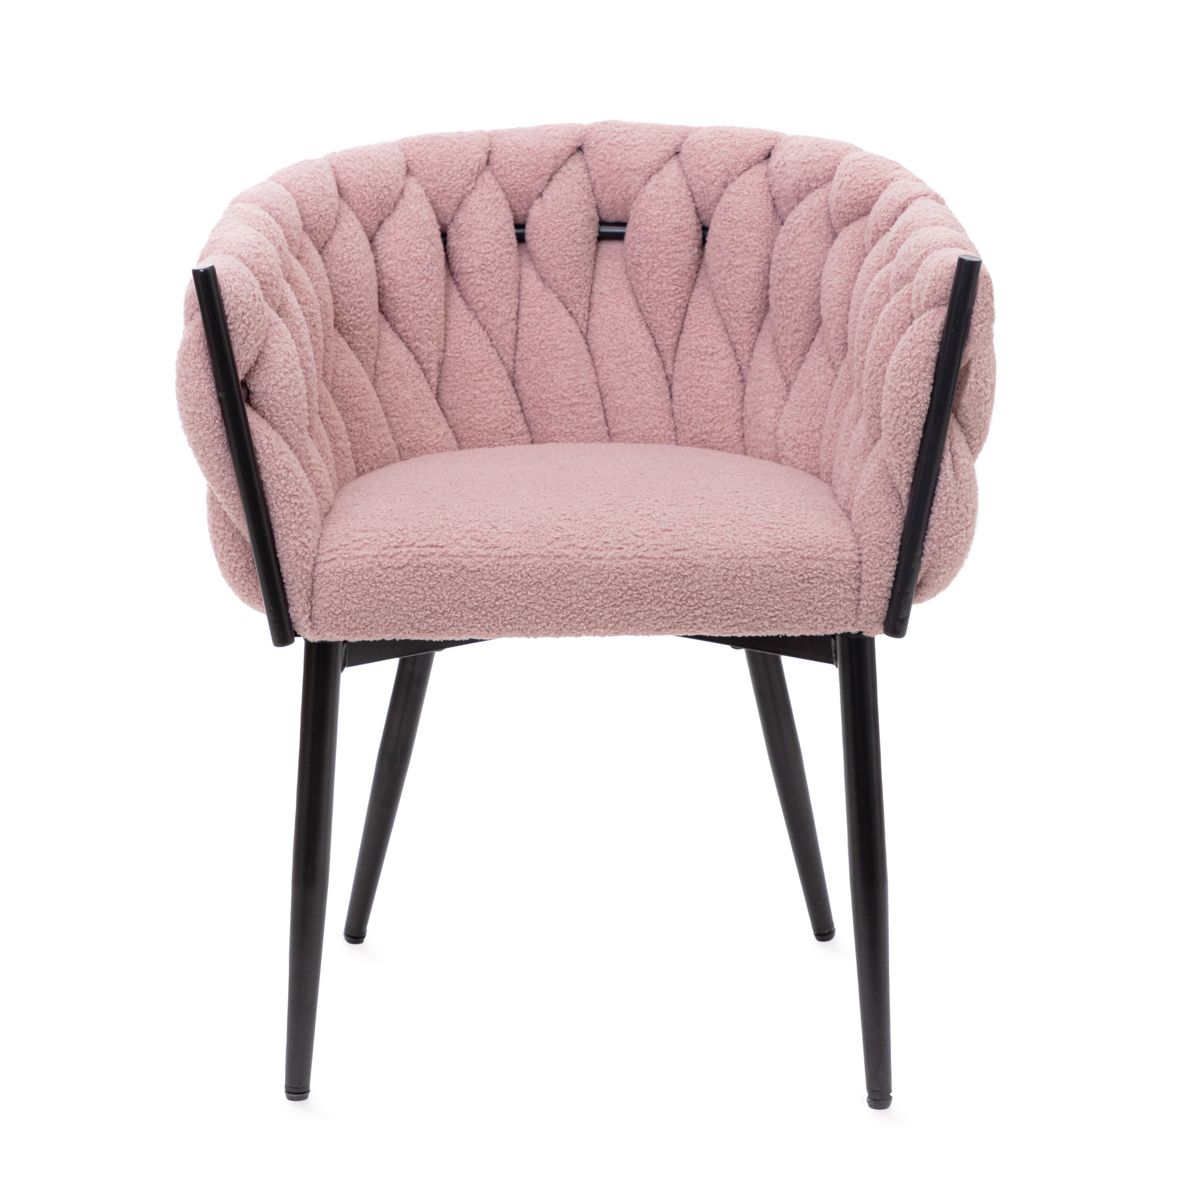 PRINSSI TEDDY krēsls no auduma TEDDY BOUCLÉ rozā 64x54x73 cm